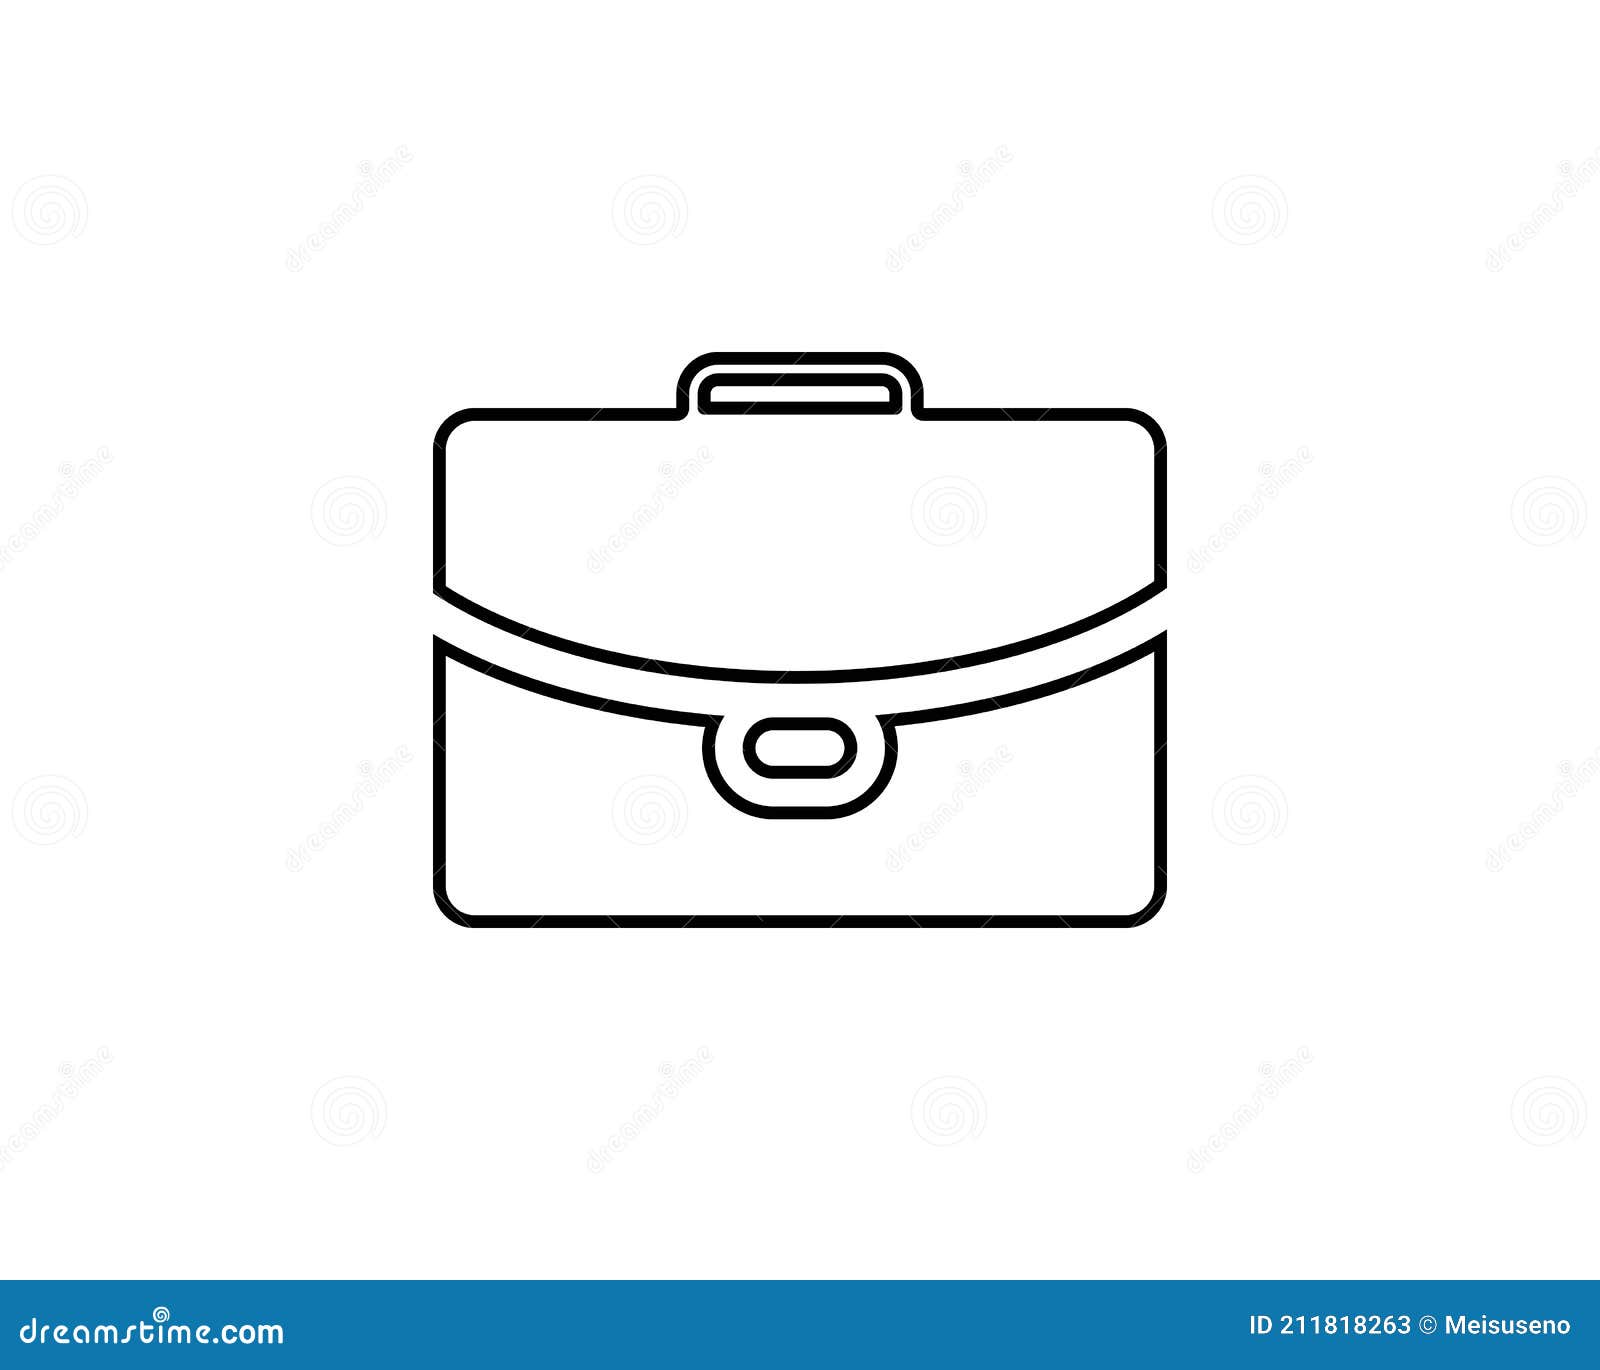 Download Suitcase Bag Icon Vector Logo Template Illustration Design Stock Vector Illustration Of Sign Element 211818263